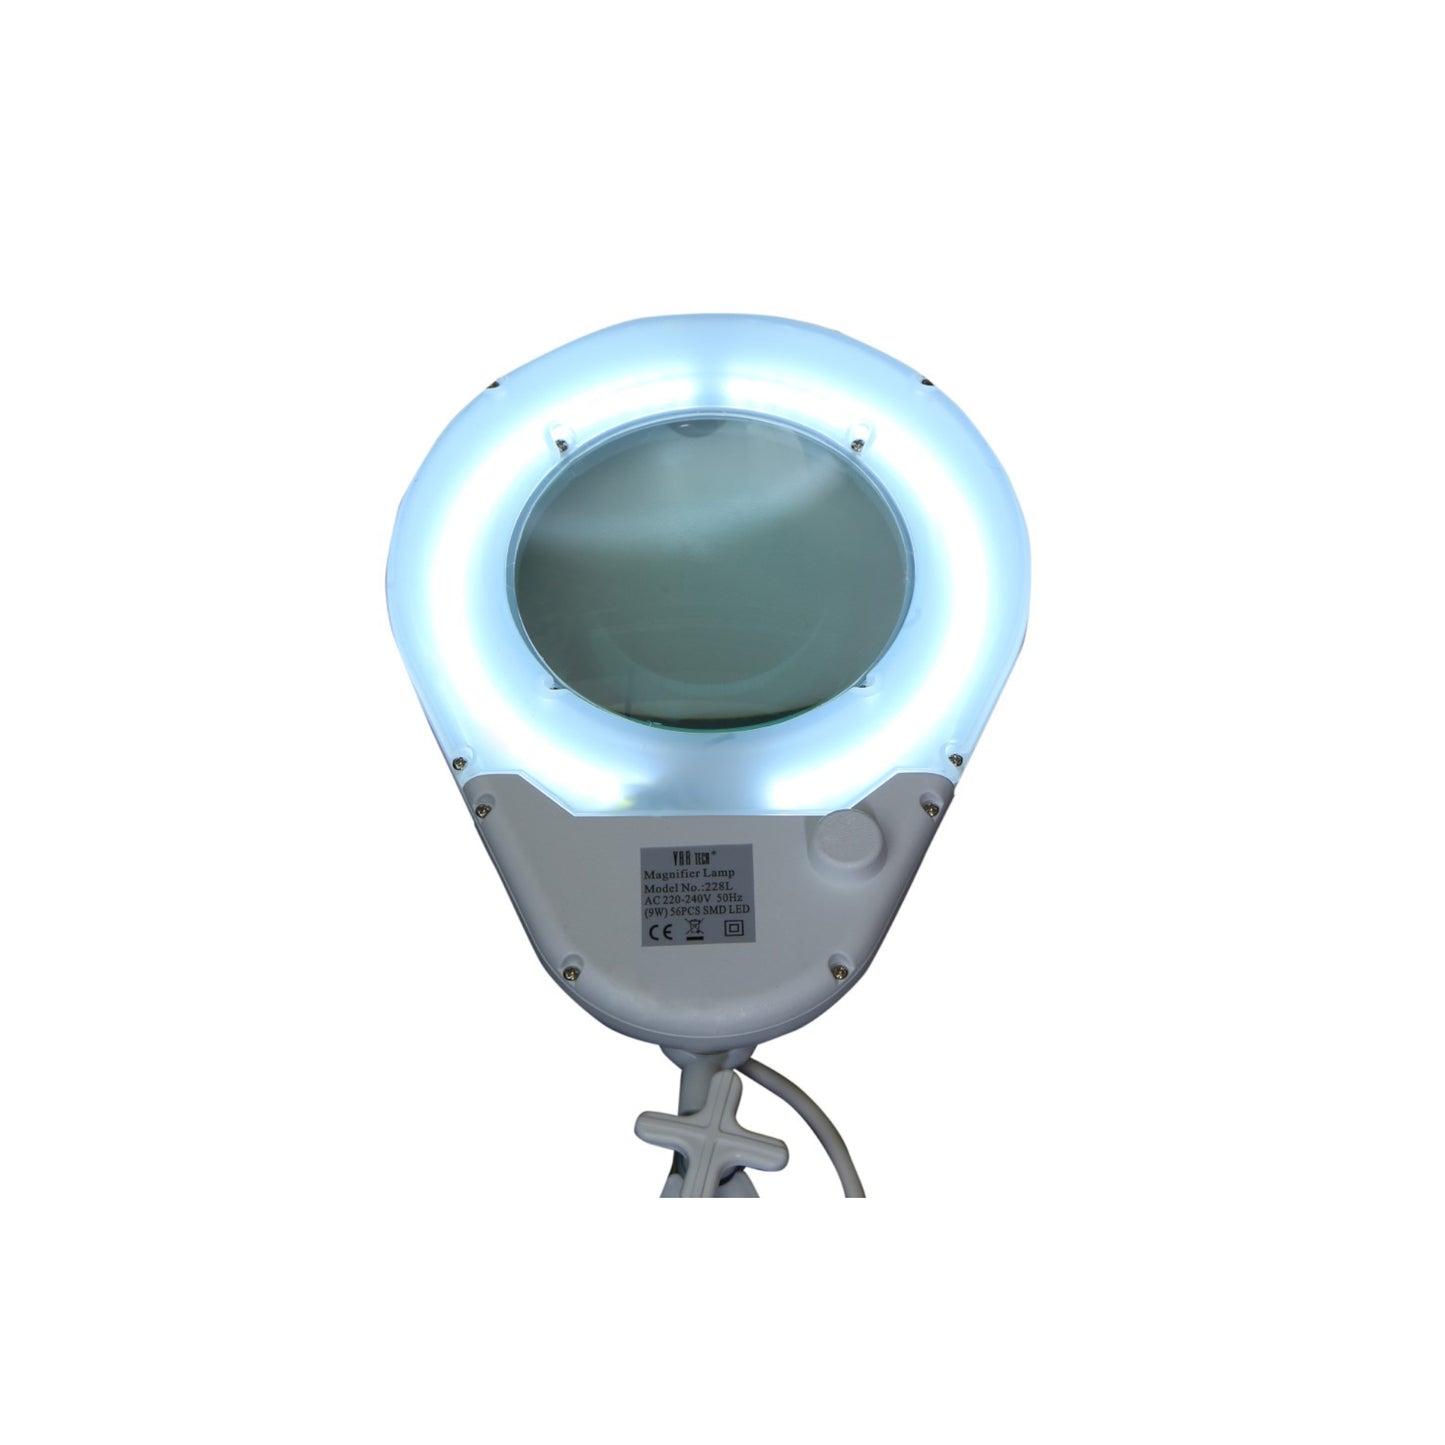 228 AL LED Magnifying lamp